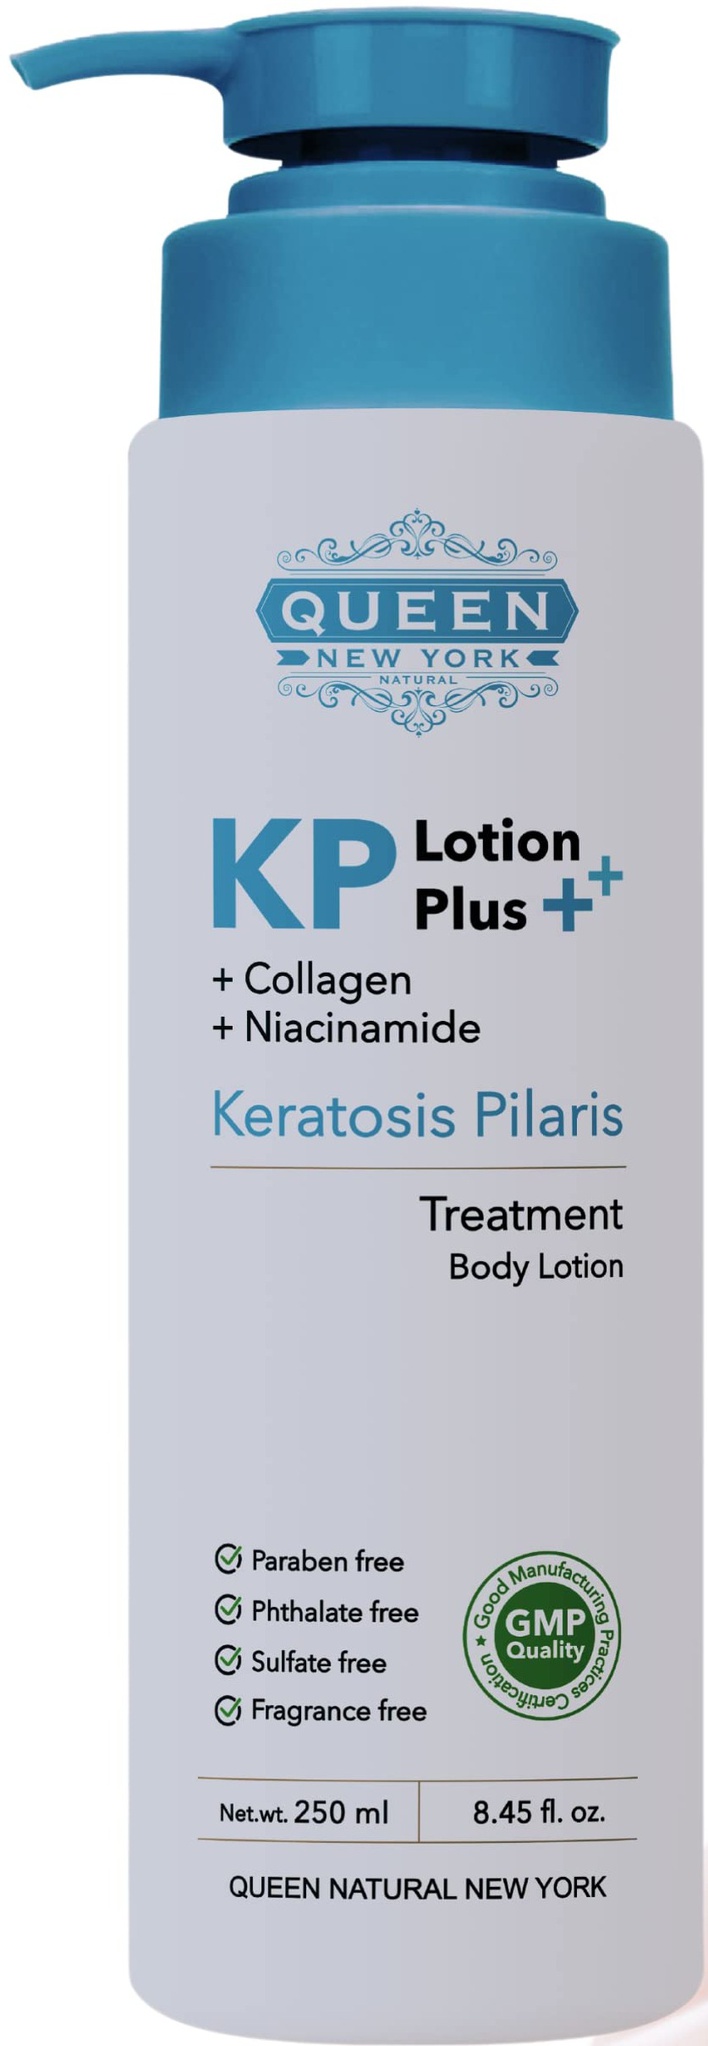 Queen Natural New York KP Lotion + Keratosis Pilaris Treatment